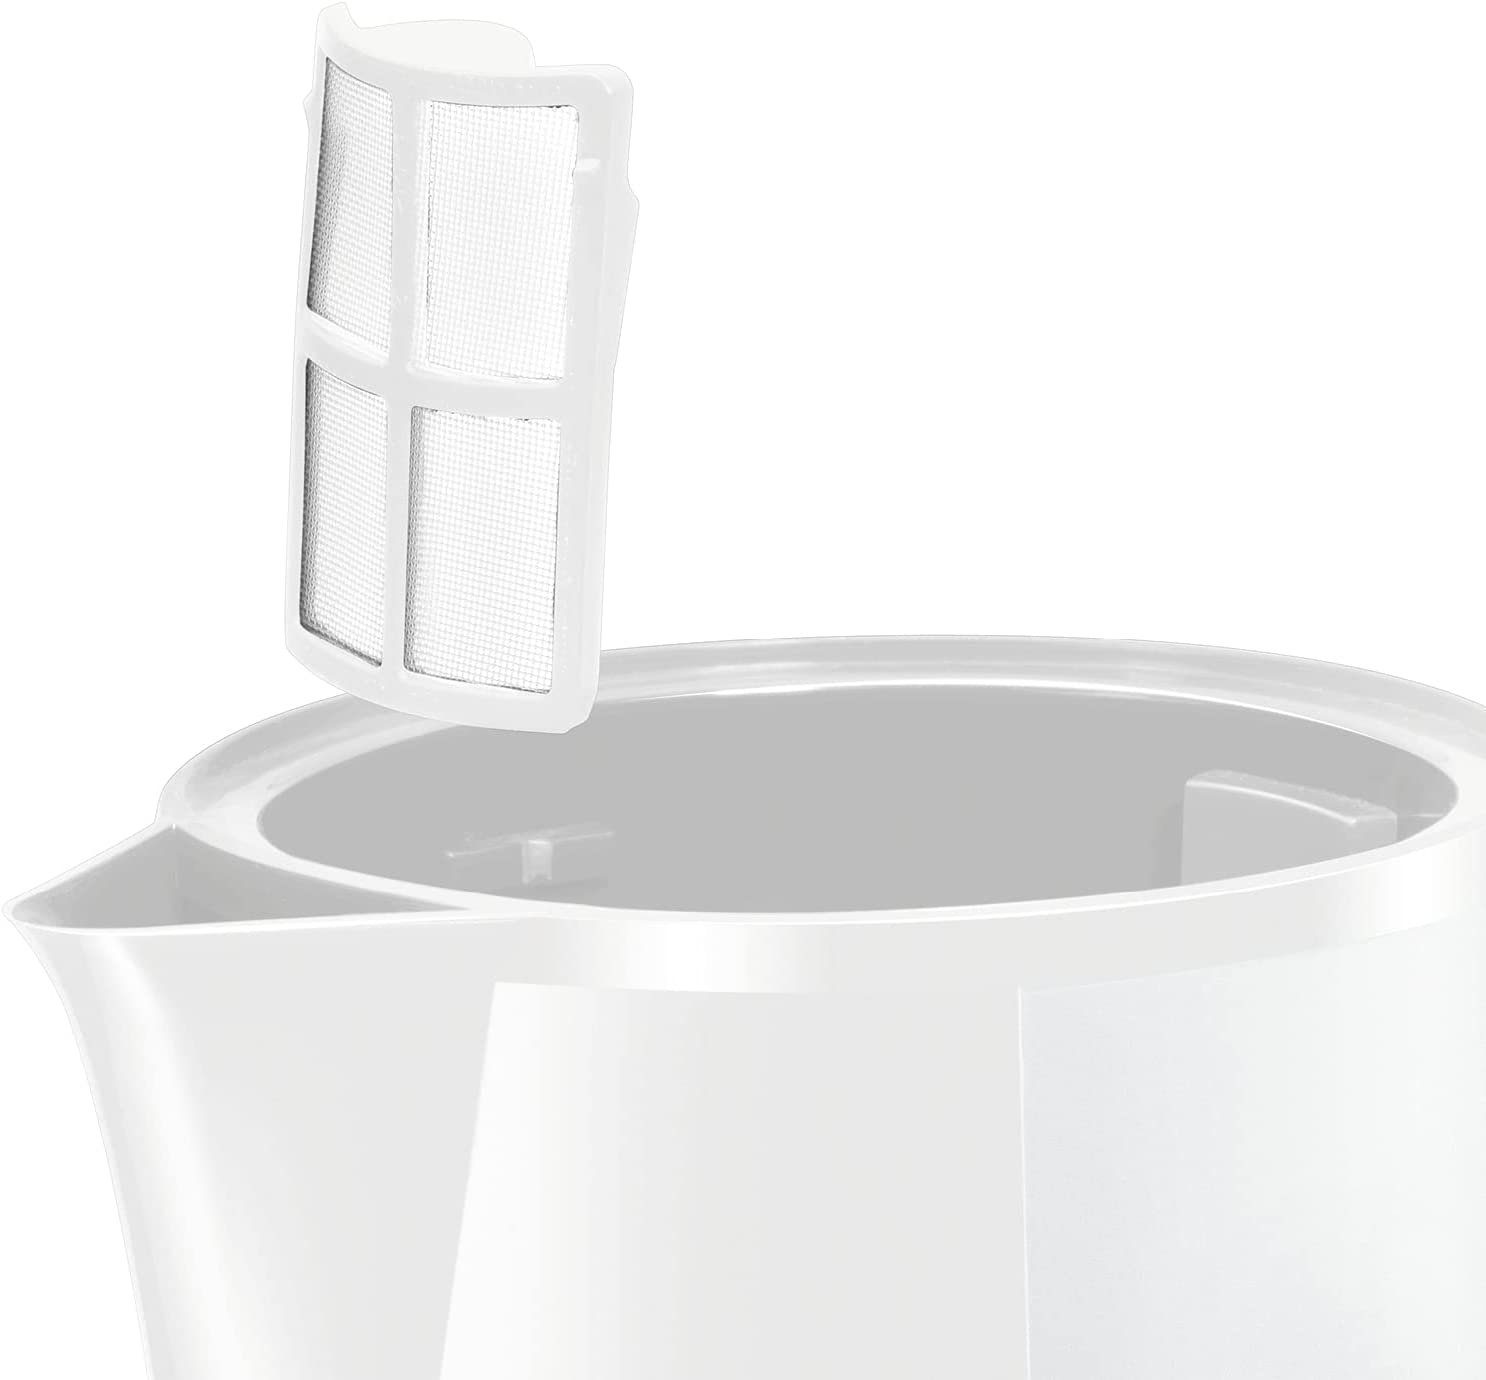 BOSCH Wasserkocher Weiß kabelloser Wasserstandsanzeige W Wasserkocher CompactClass, 2400